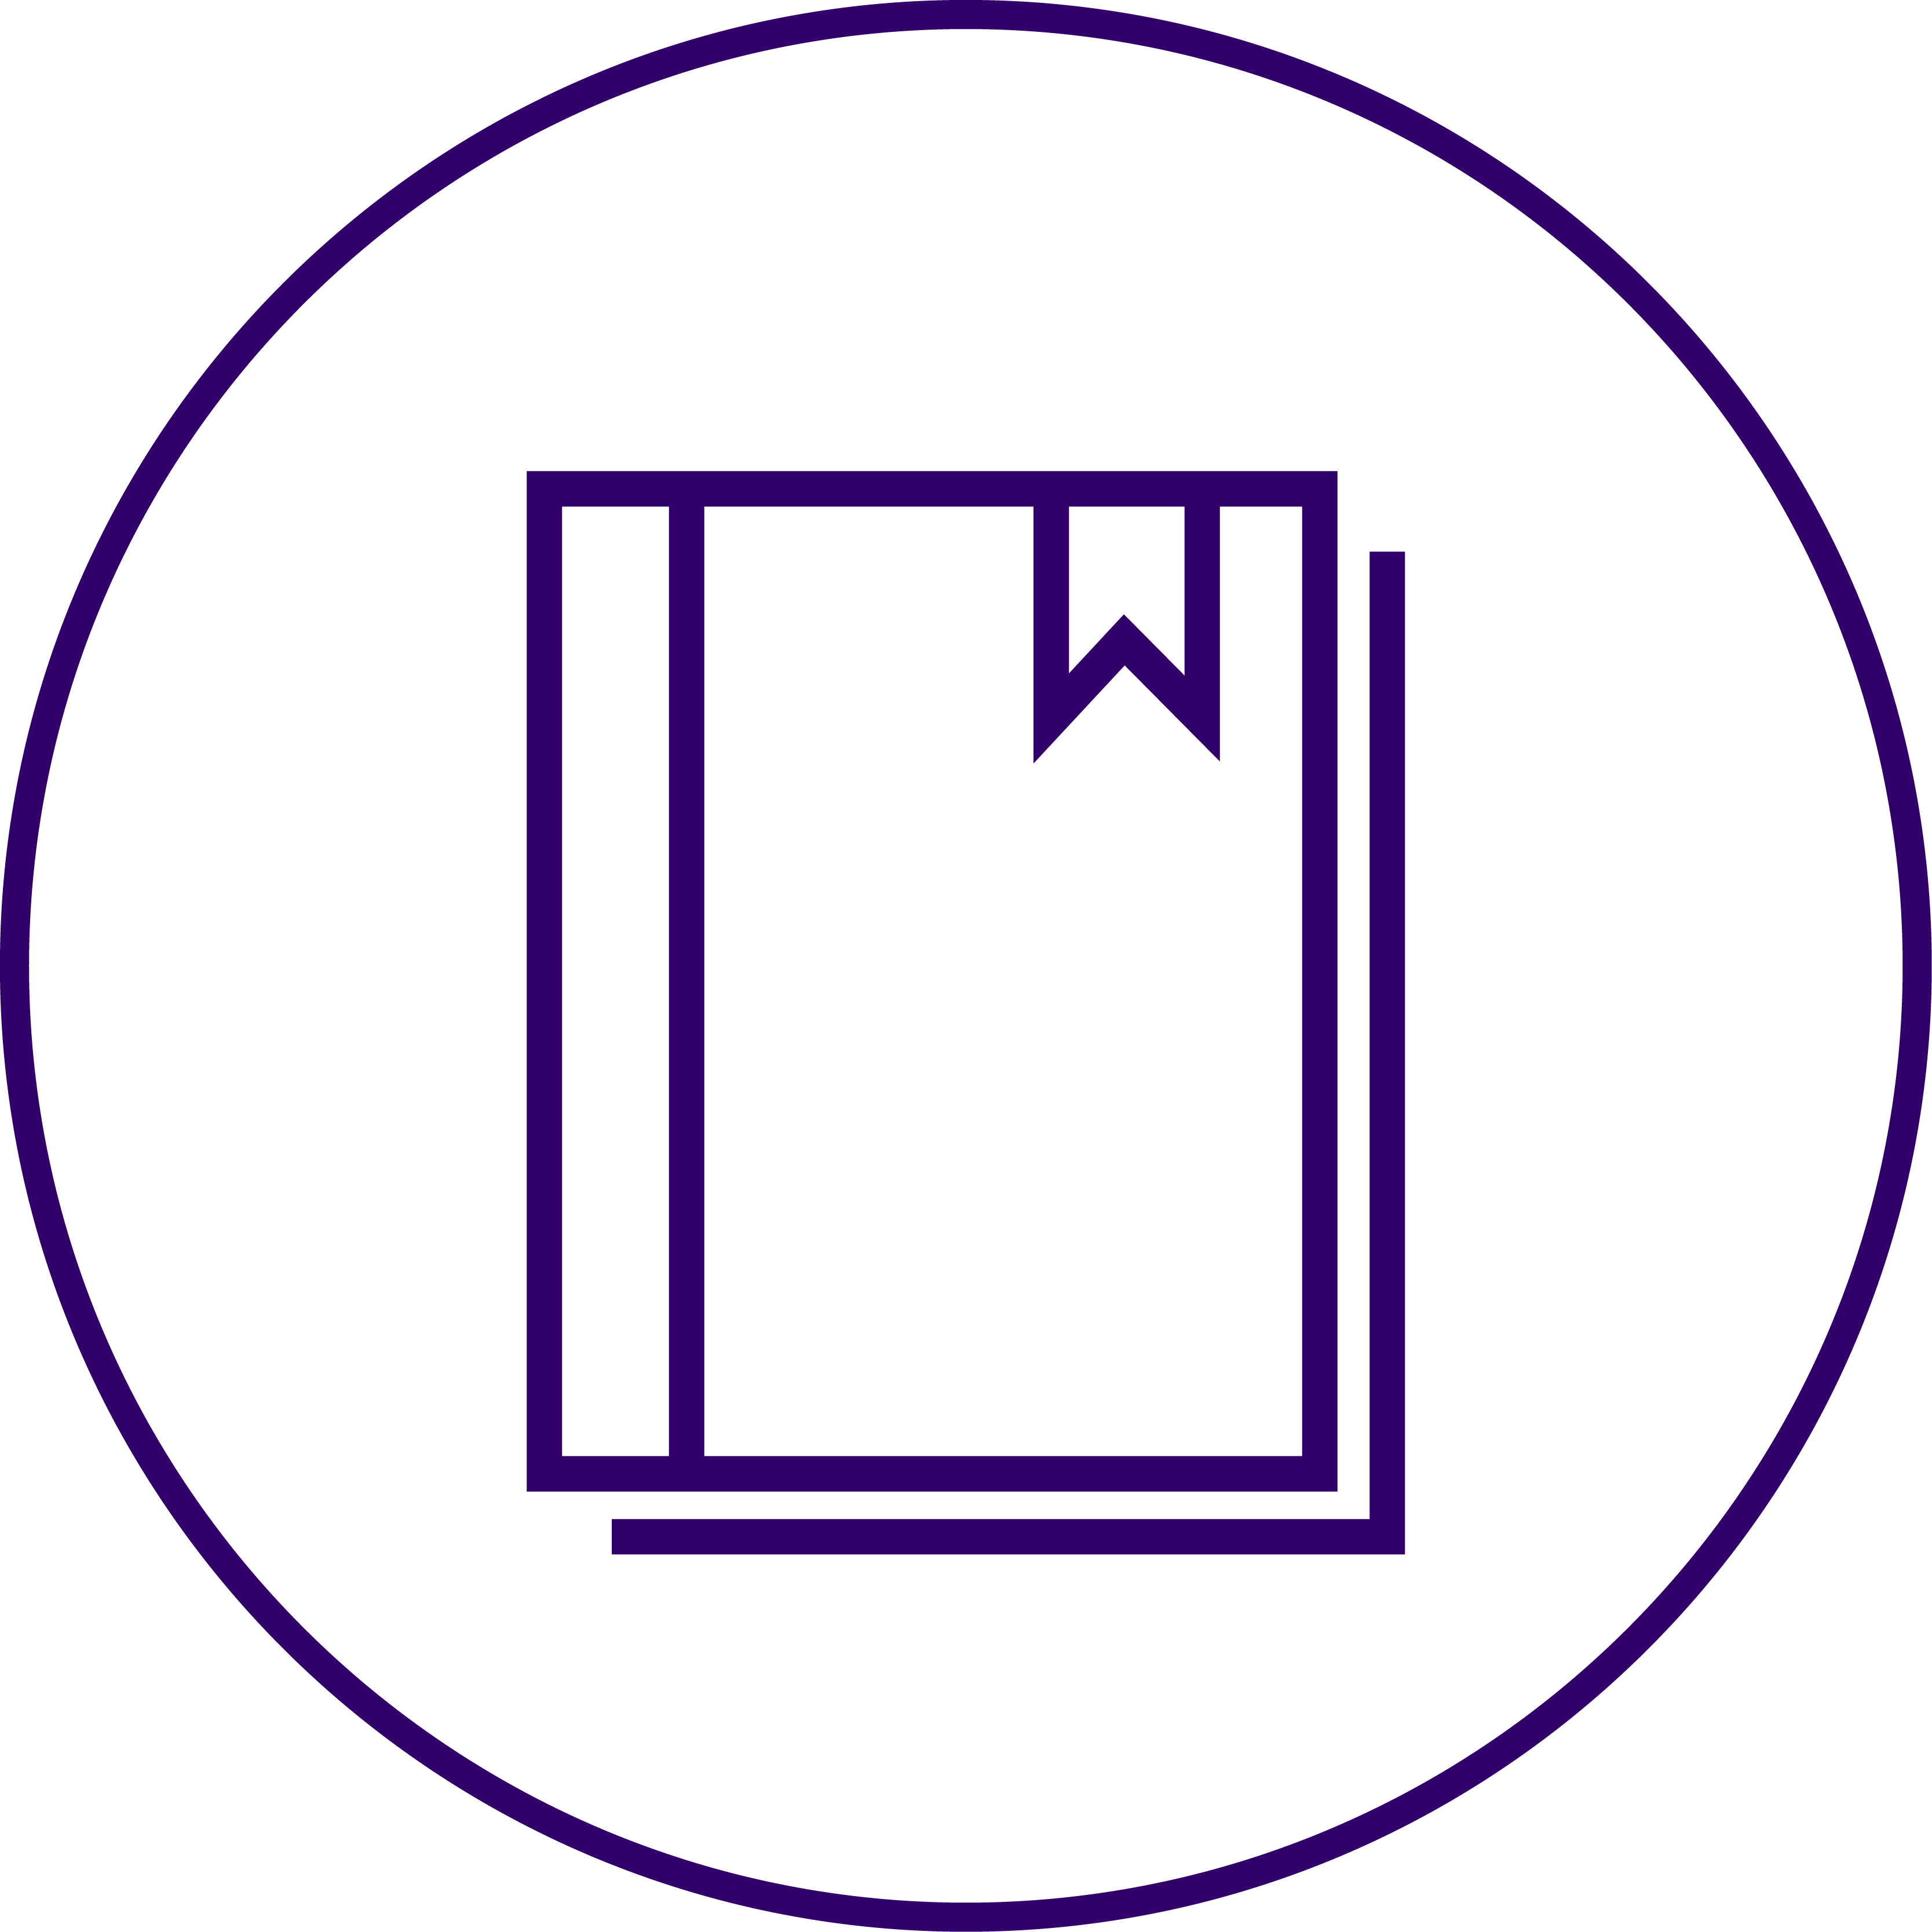 ChemE Undergraduate - Purple icon containing a book inside a circle